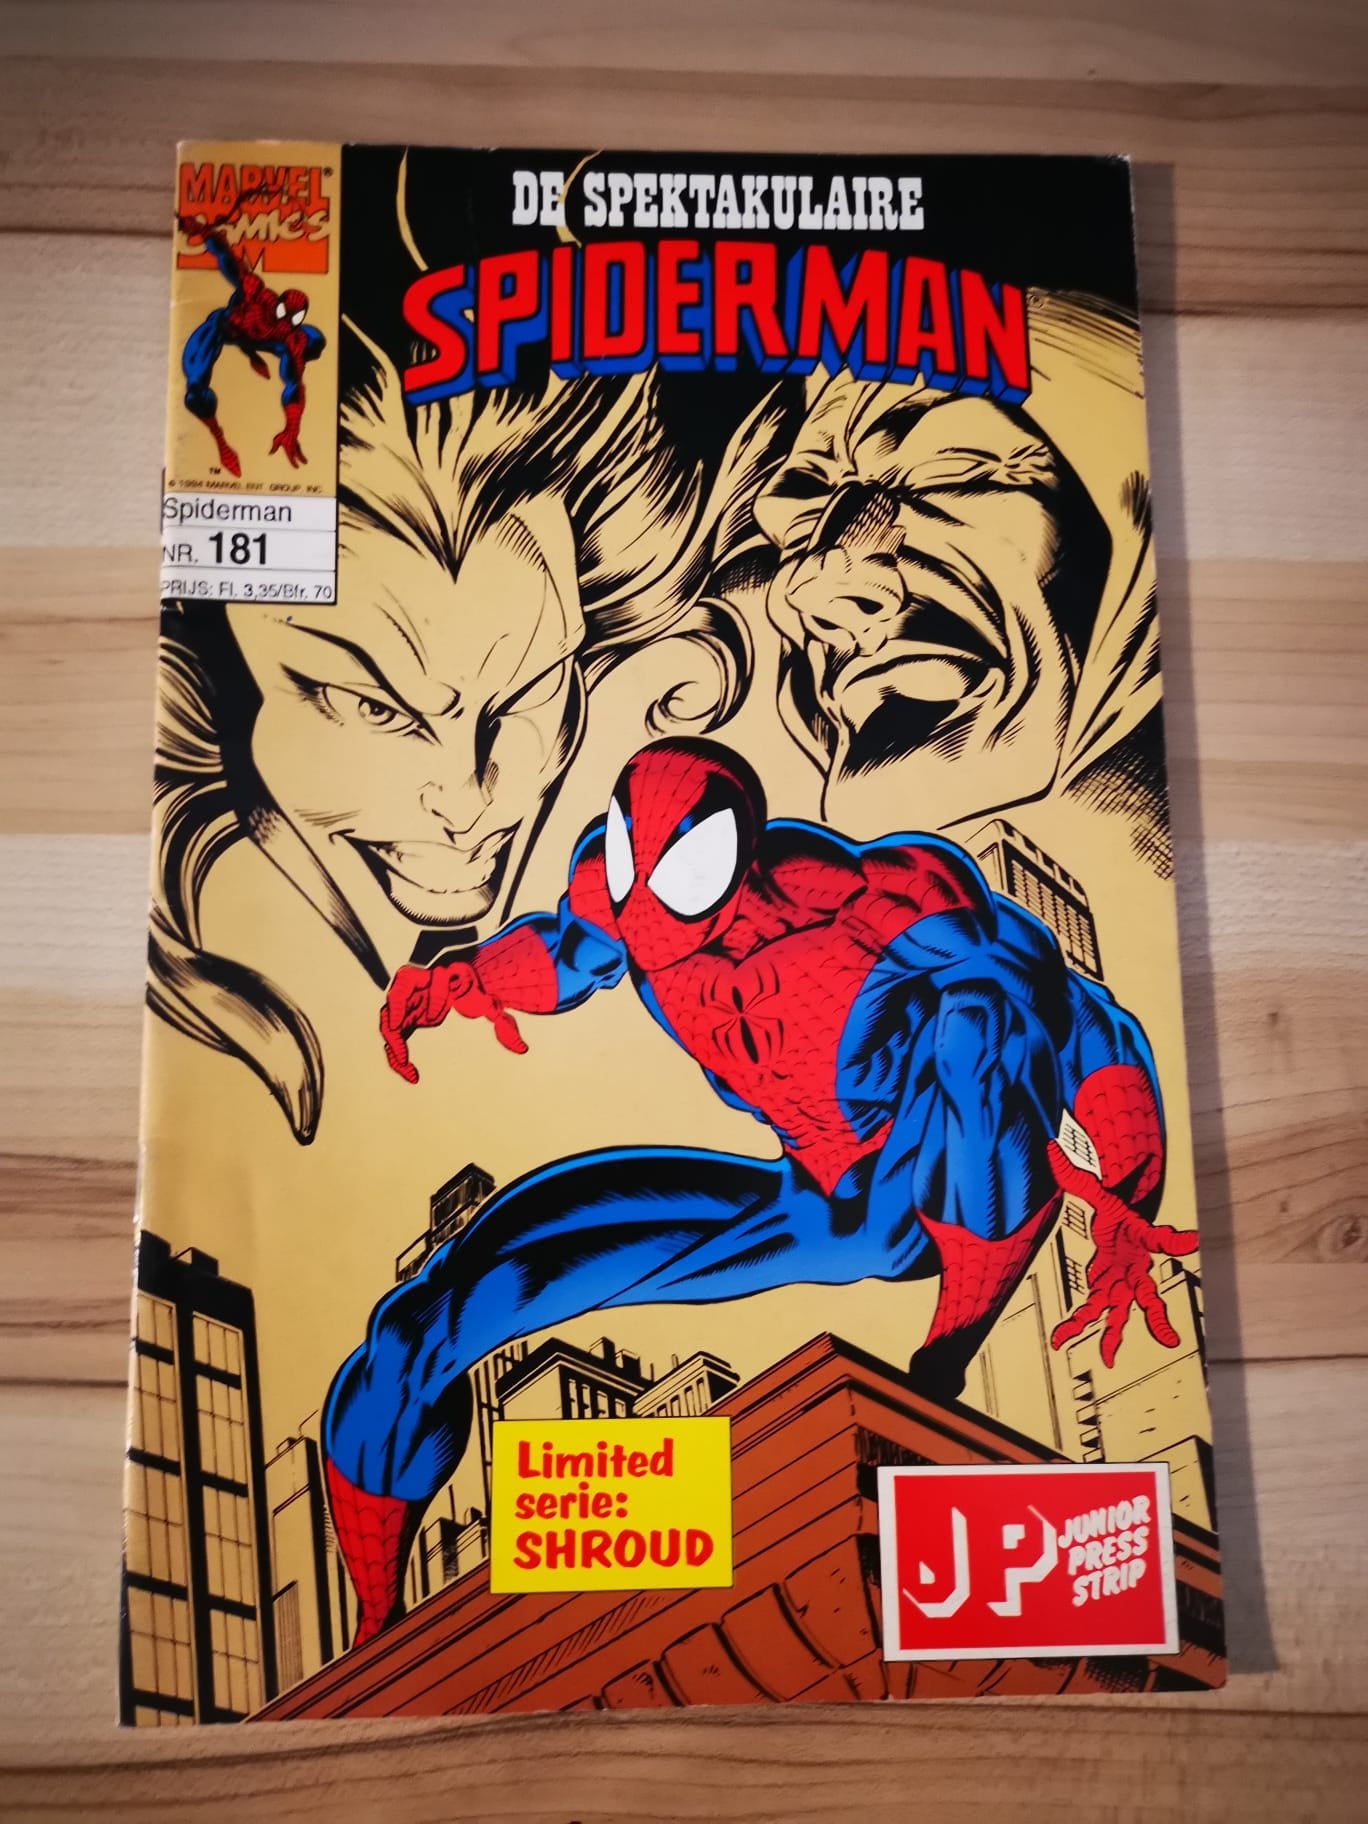 De spektakulaire spiderman #181